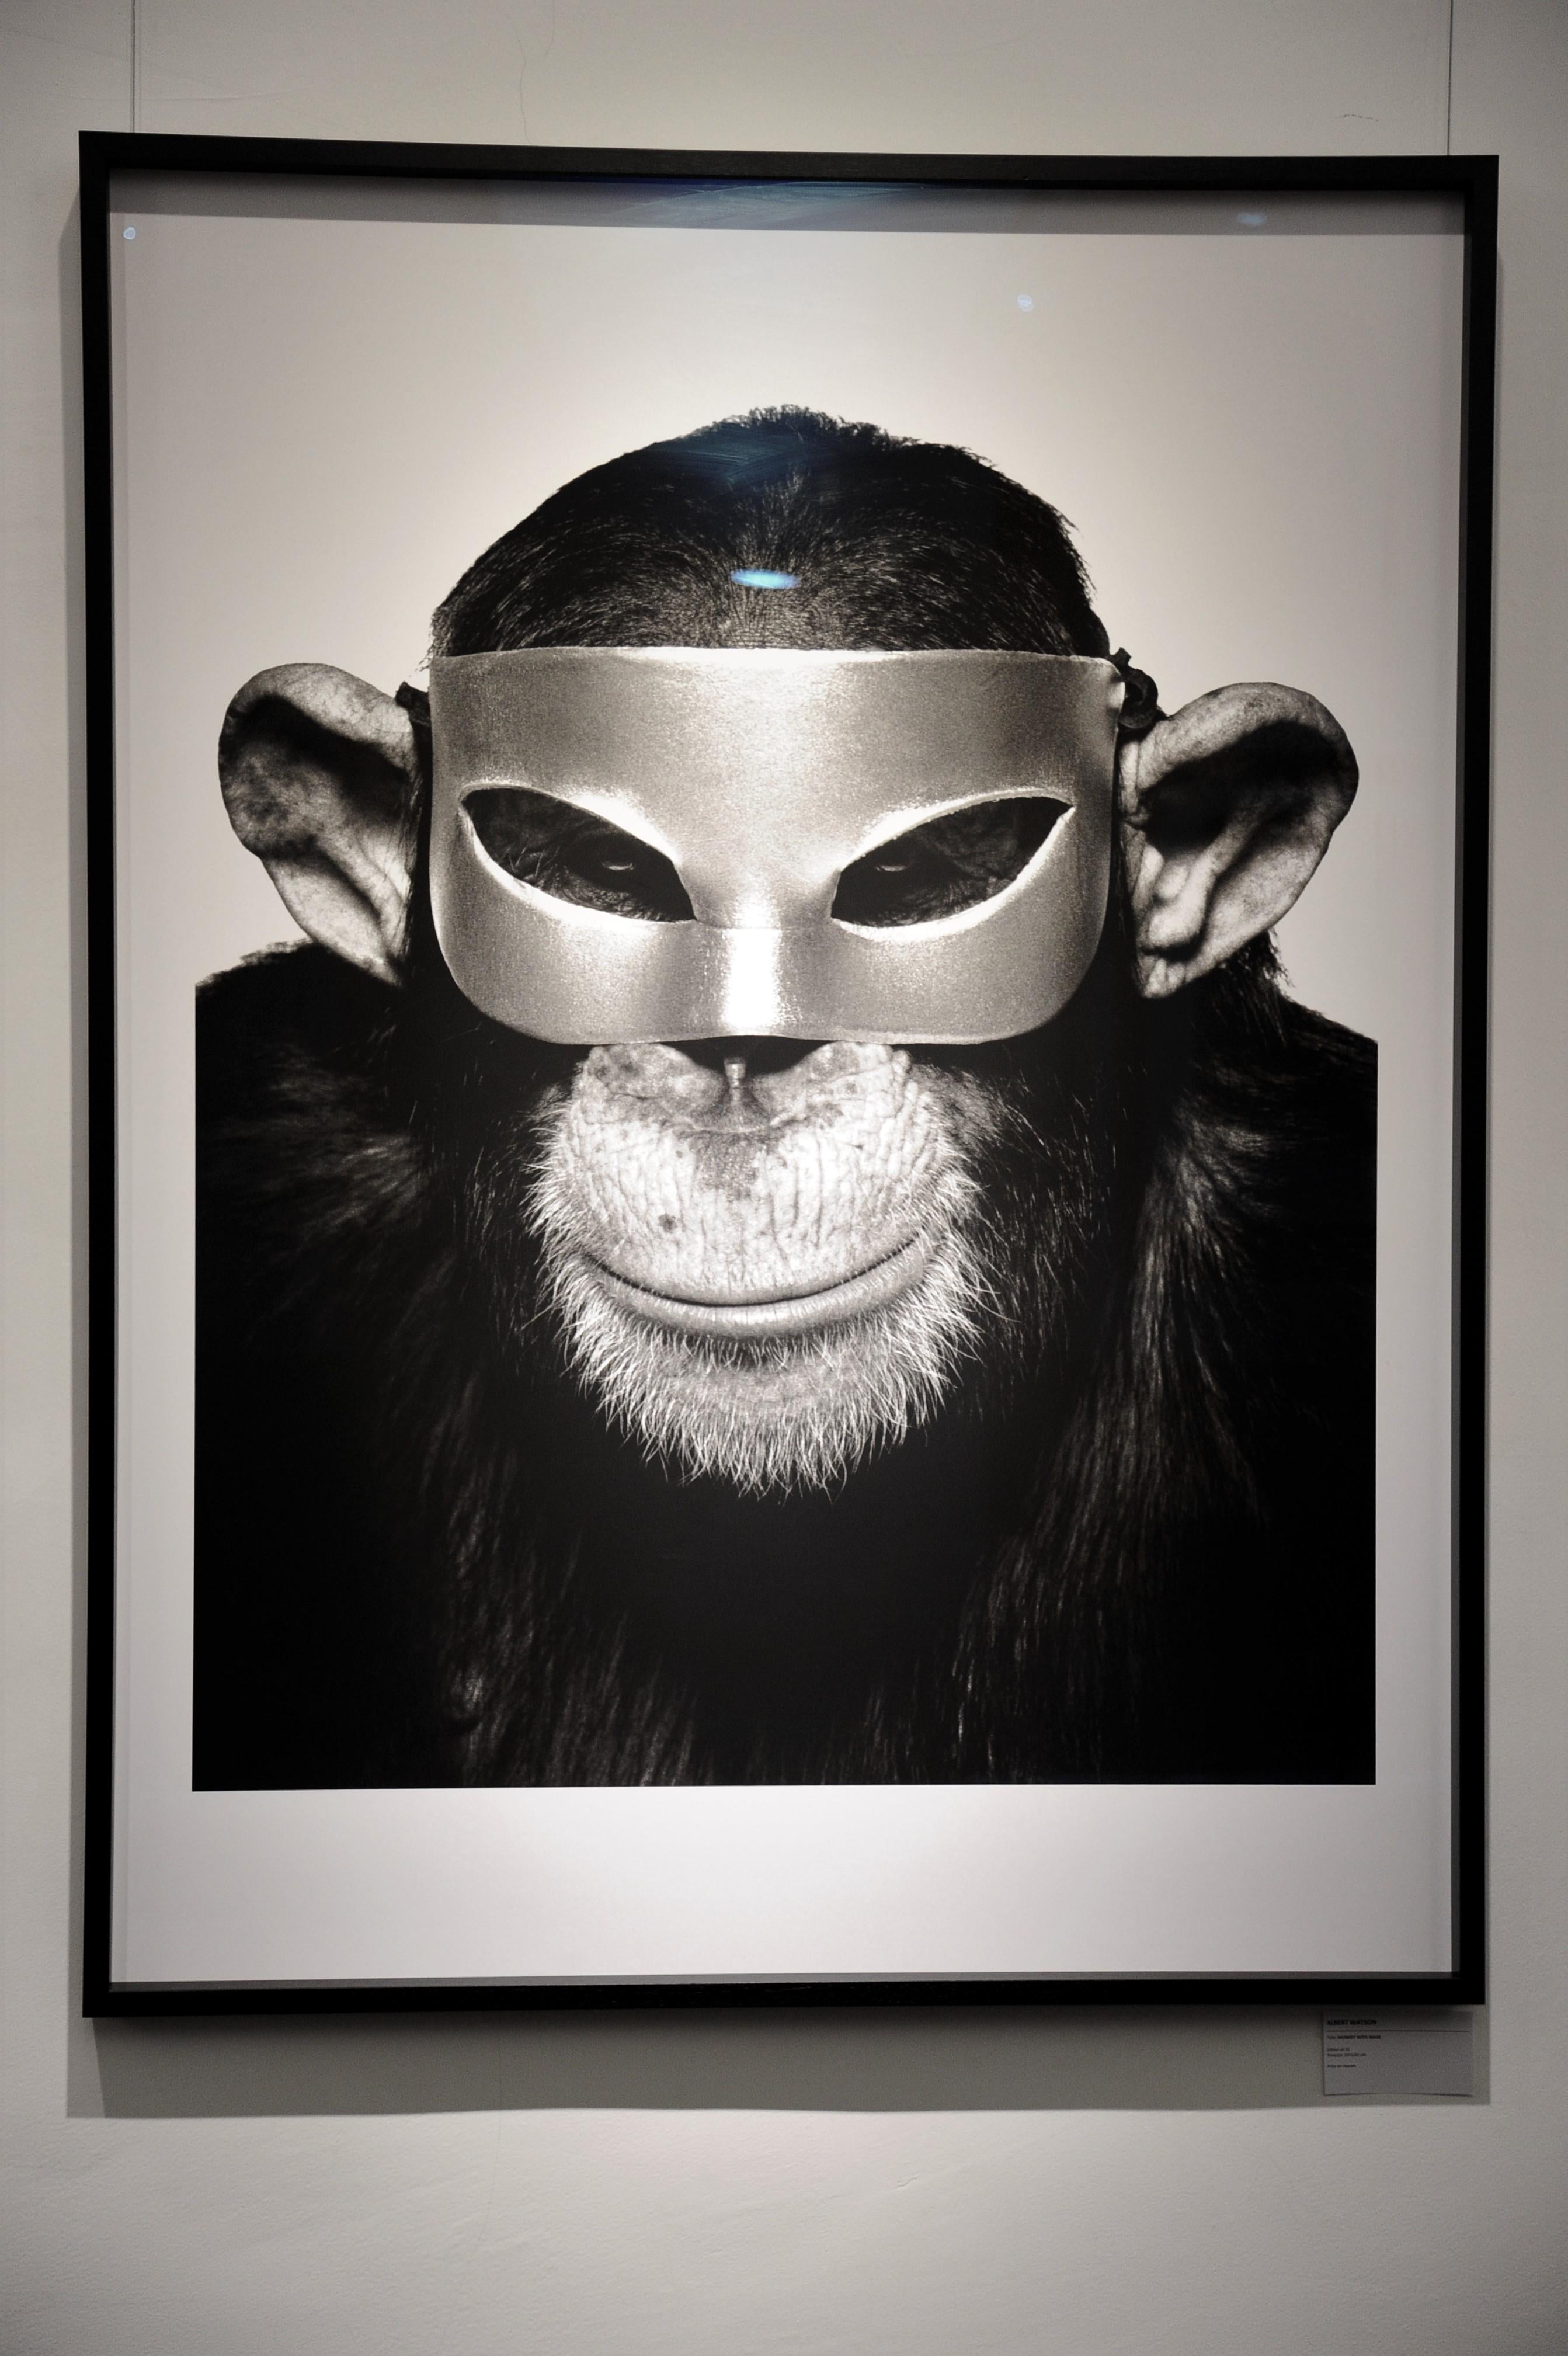 Monkey with Mask - animal portrait with mask, fine art photography, 1992 - Photograph by Albert Watson